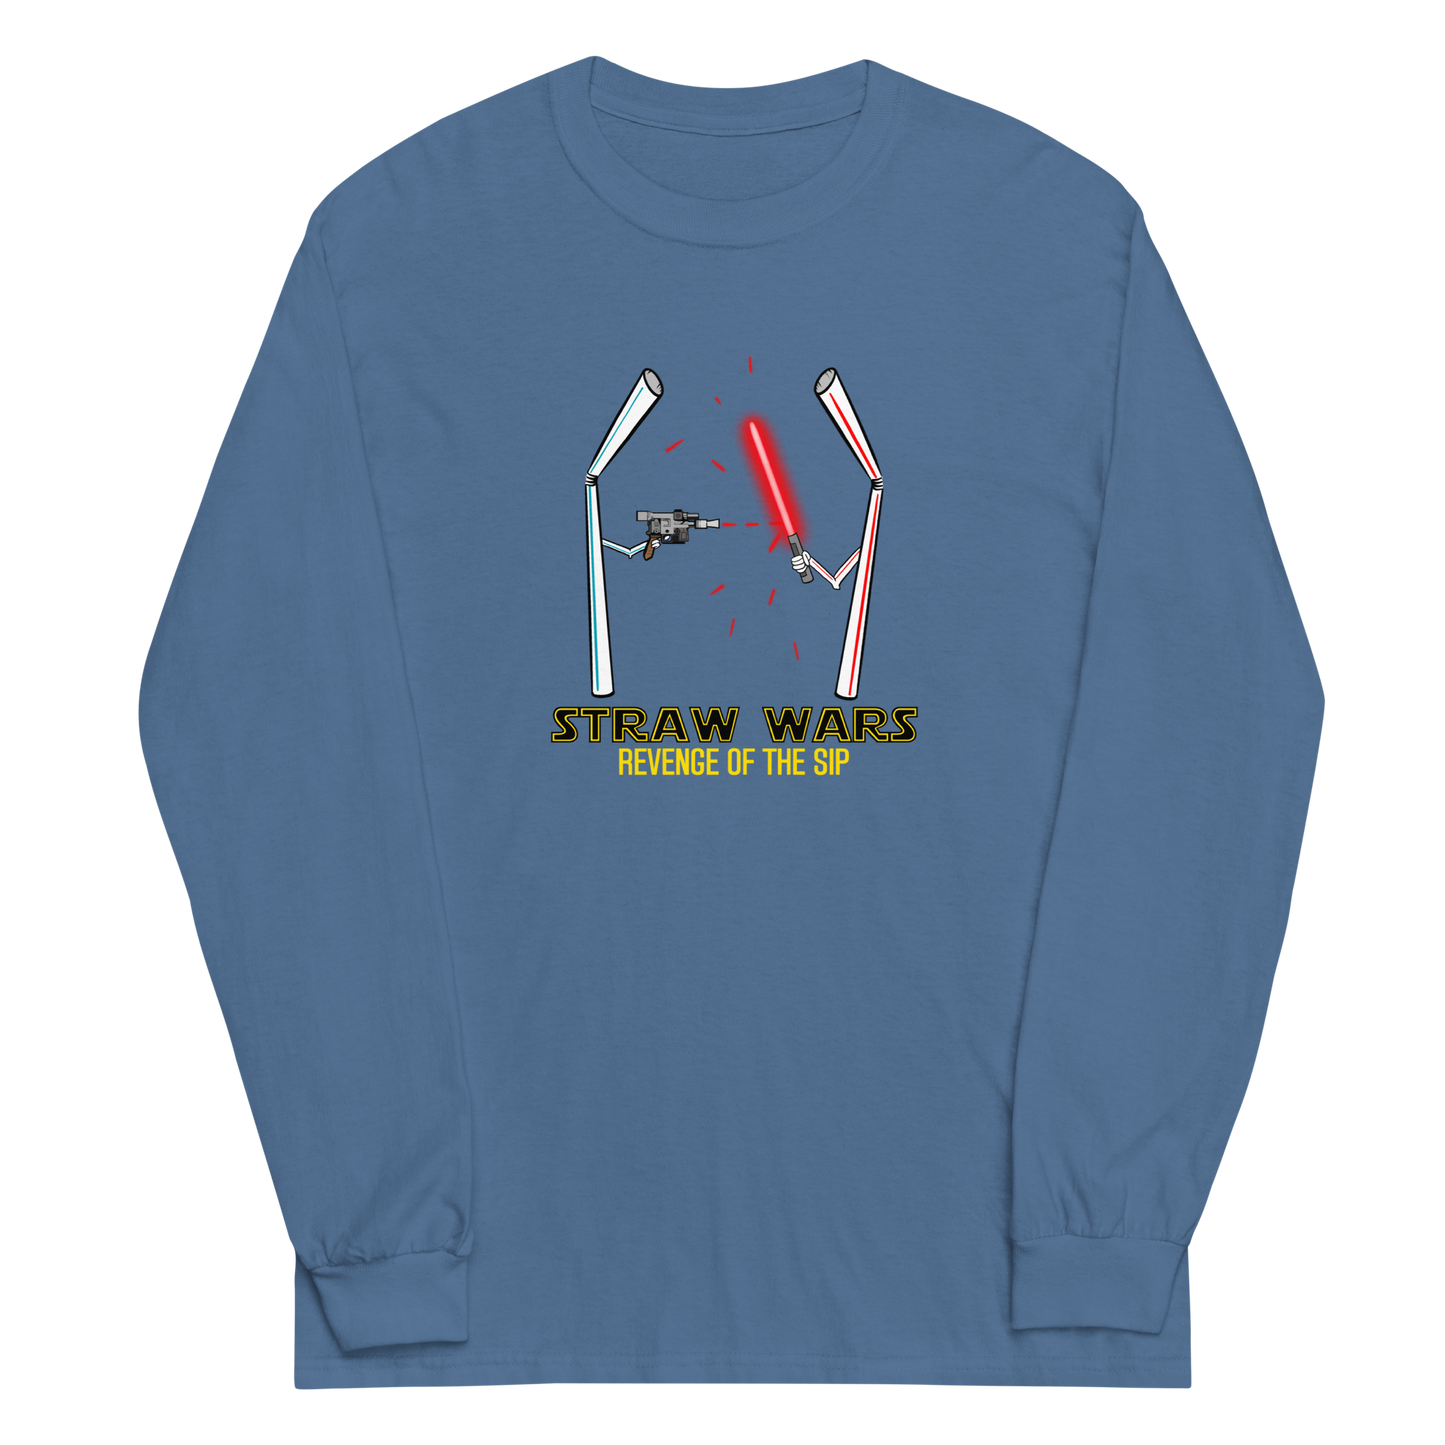 Straw Wars Long Sleeve